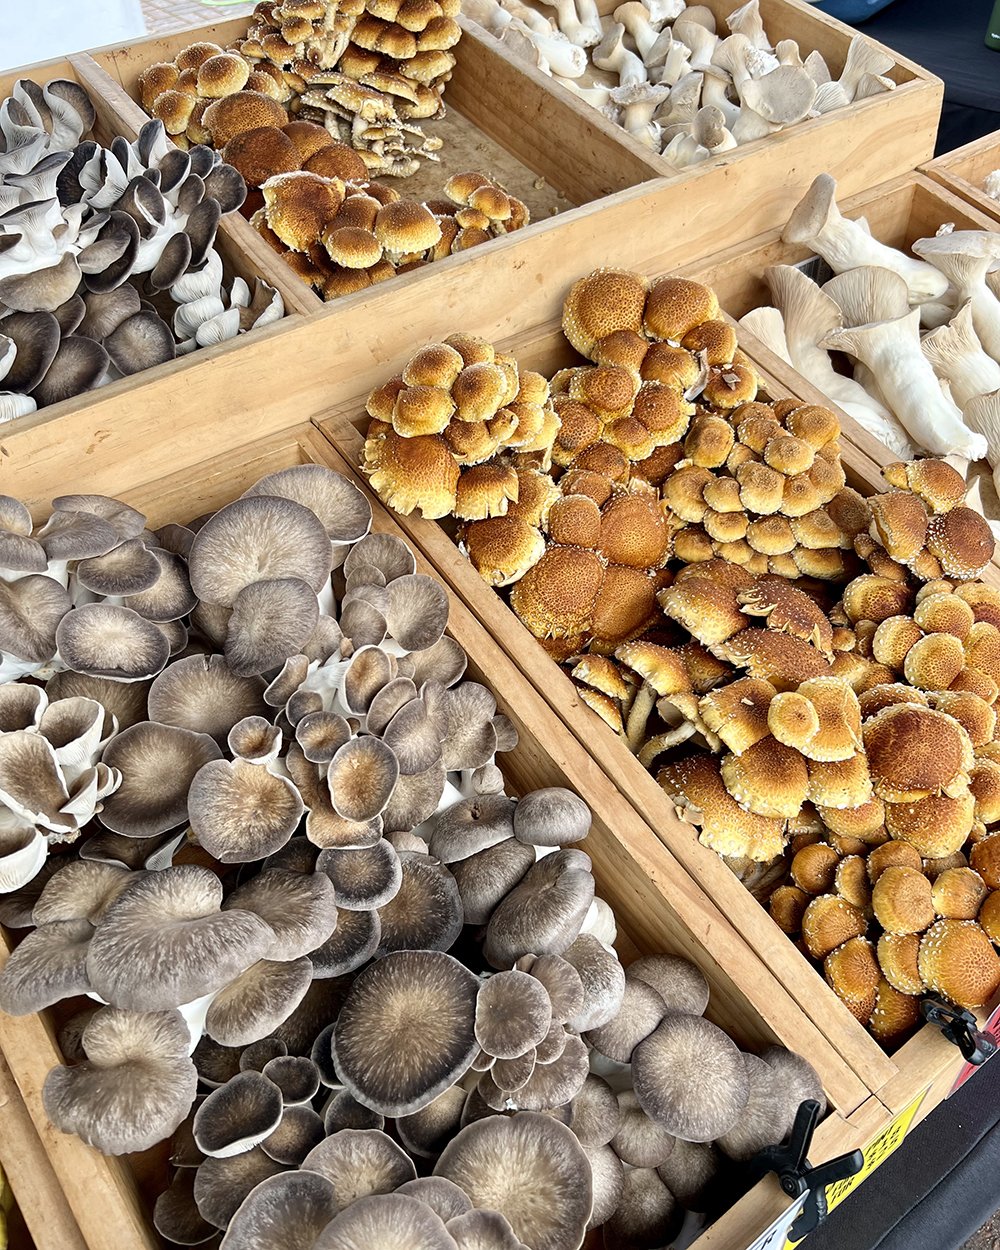  So many kinds of mushrooms at the farmer’s market. 